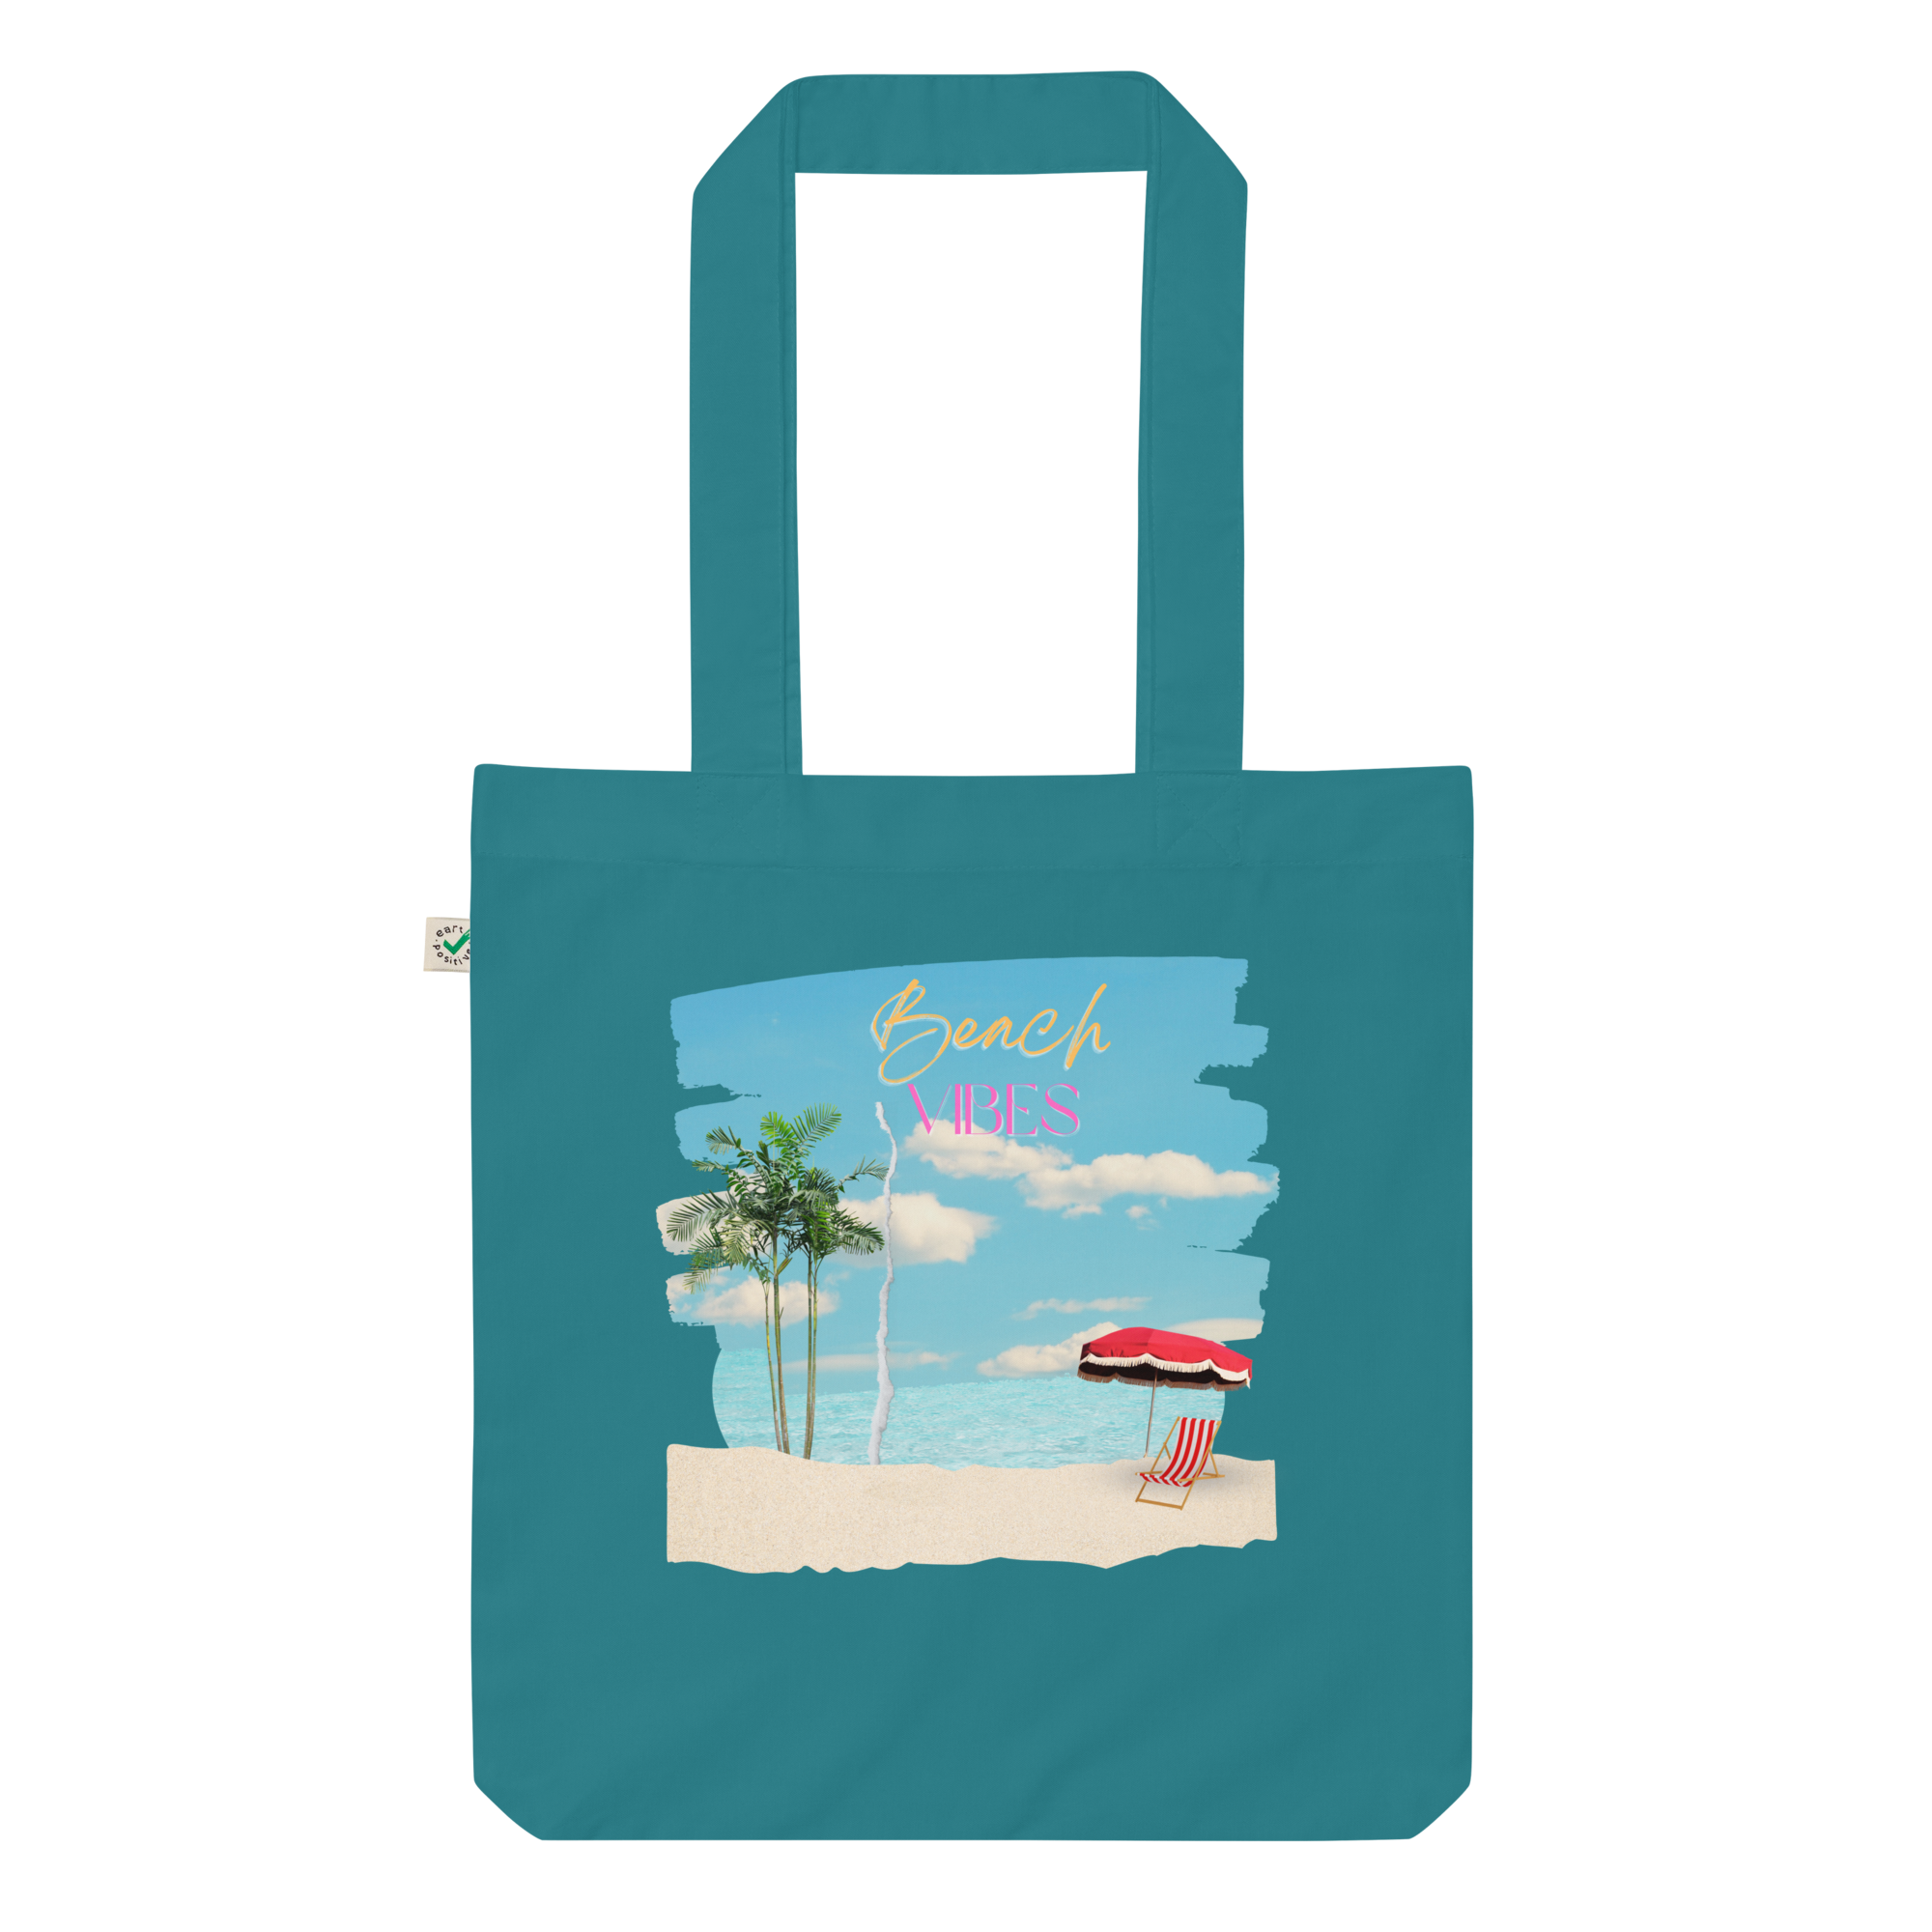 Cute sunny beach day cartoon illustration motif set Tote Bag by  LimolidaDesignStudio_Art_Pattern_Illustr